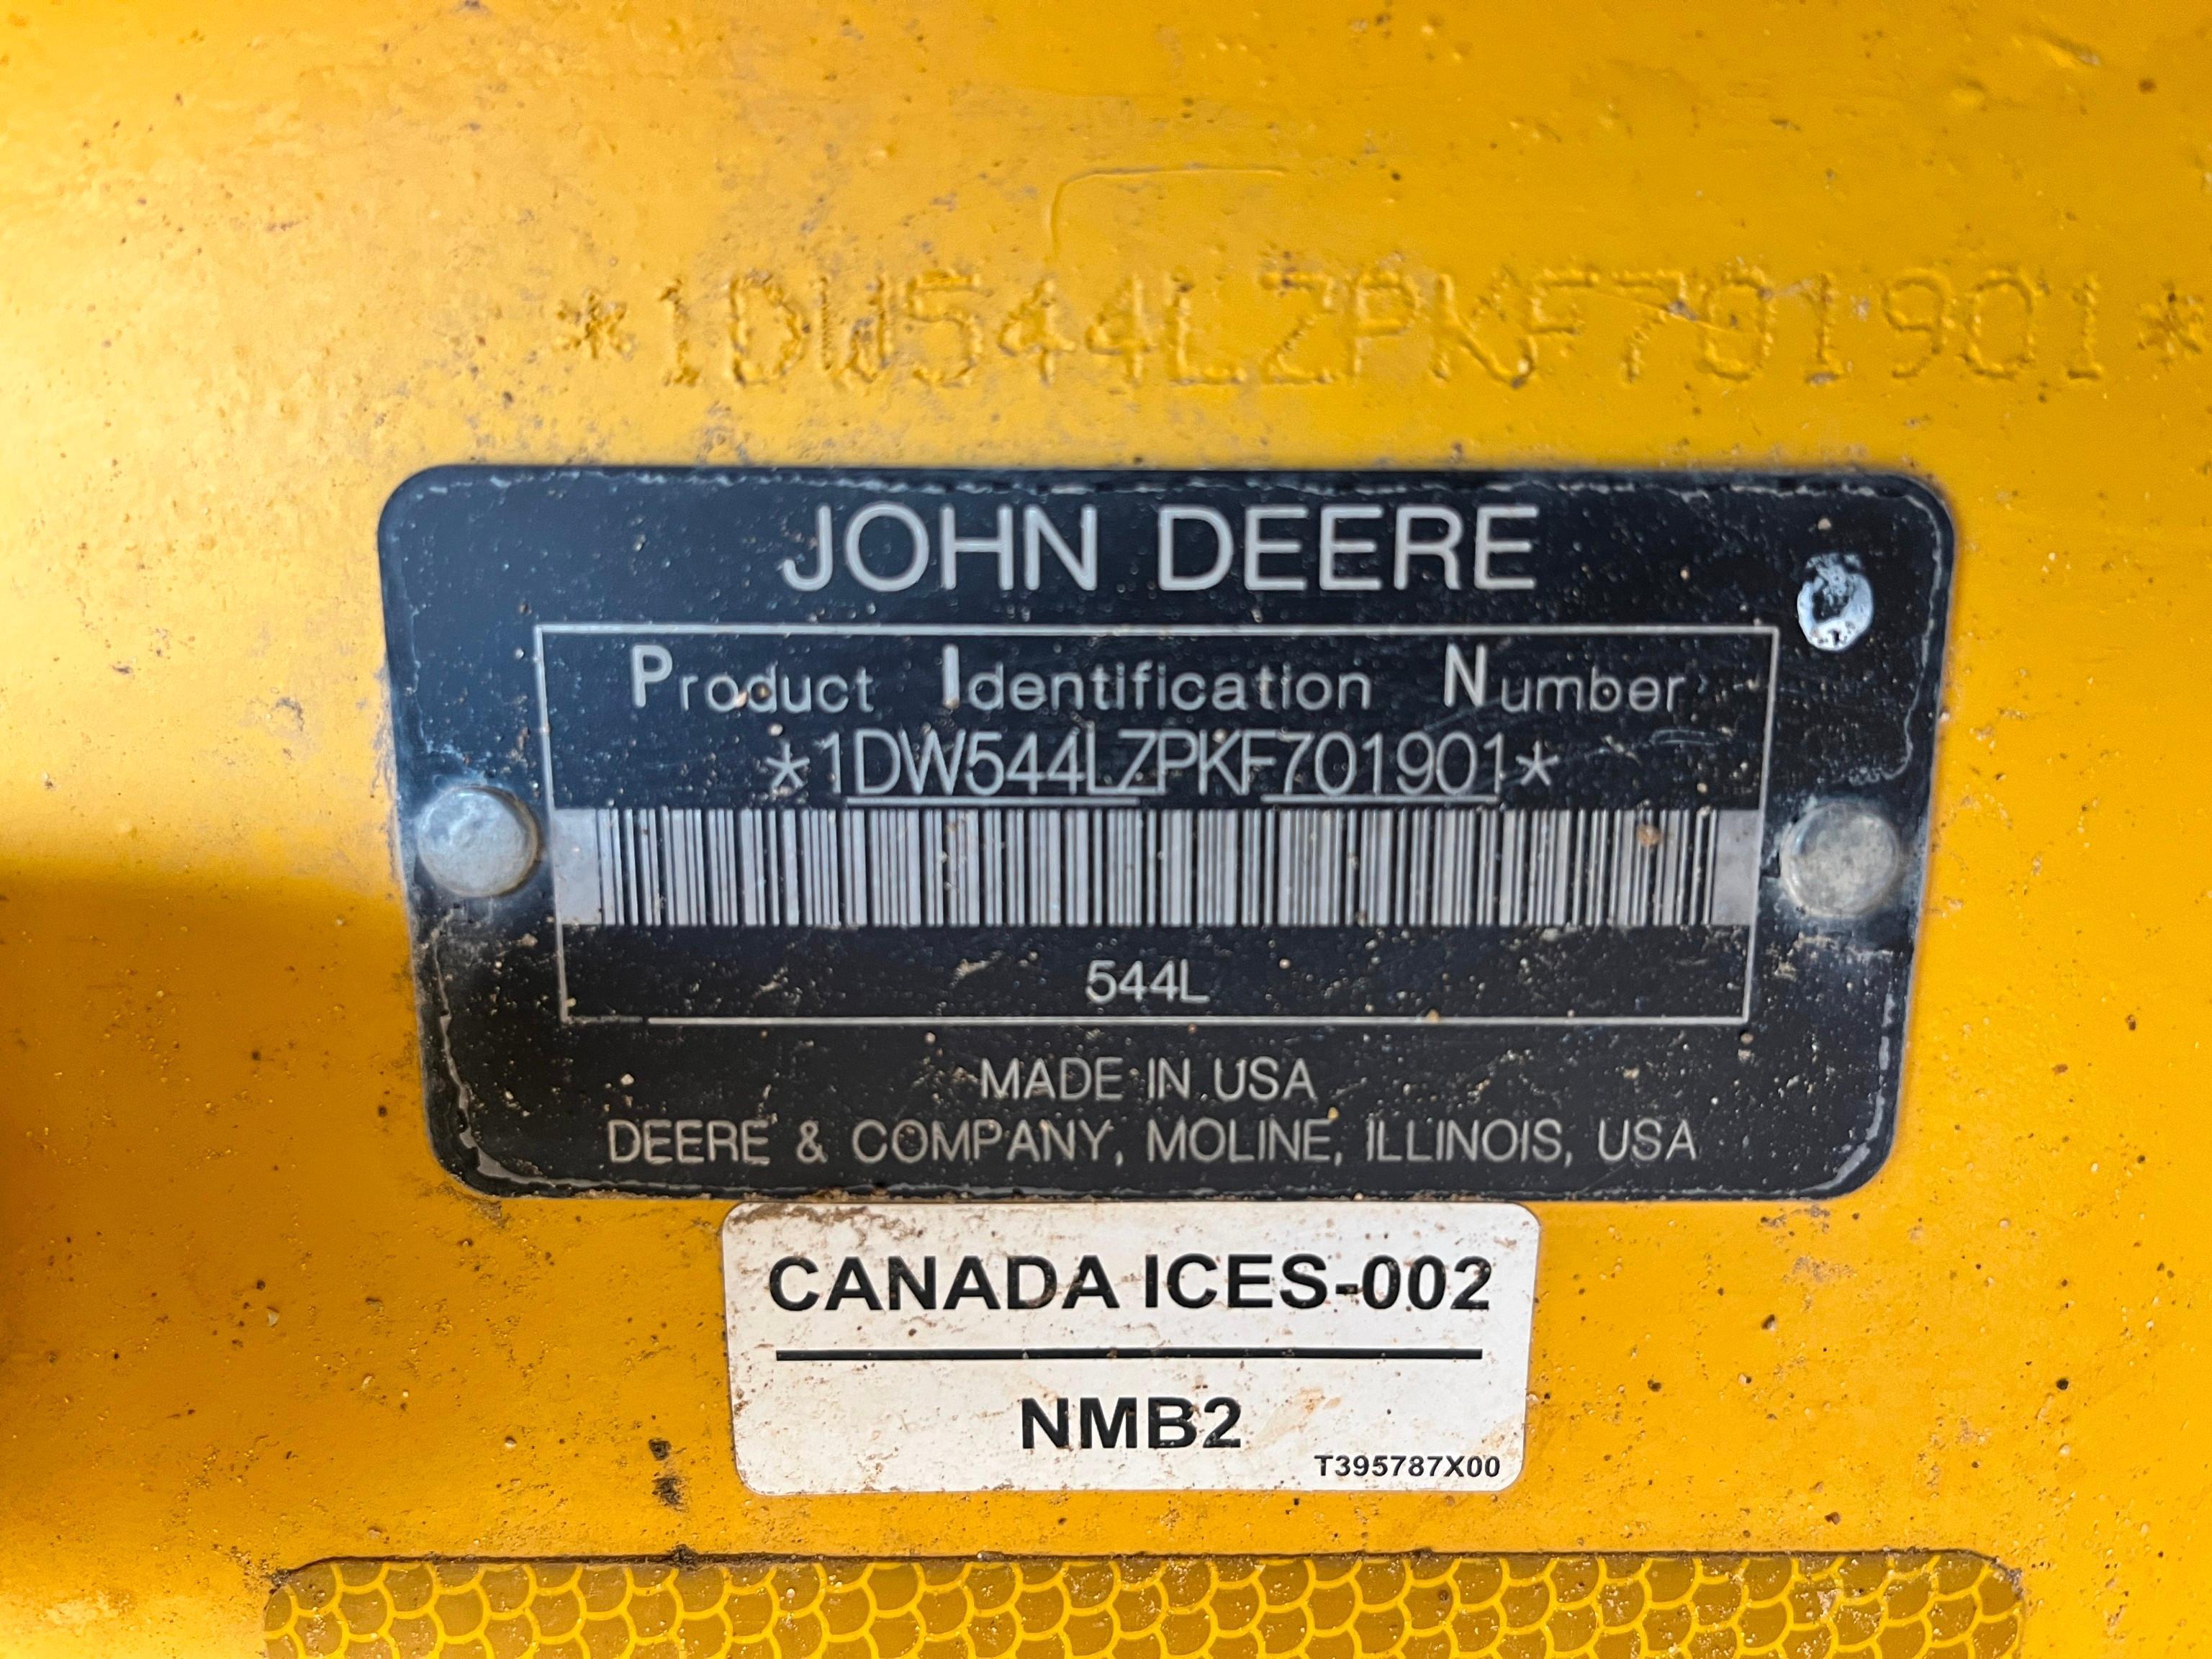 2021 JOHN DEERE 544L RUBBER TIRED LOADER SN:1DW544LZPKF701901 powered by John Deere PVS 6068 diesel